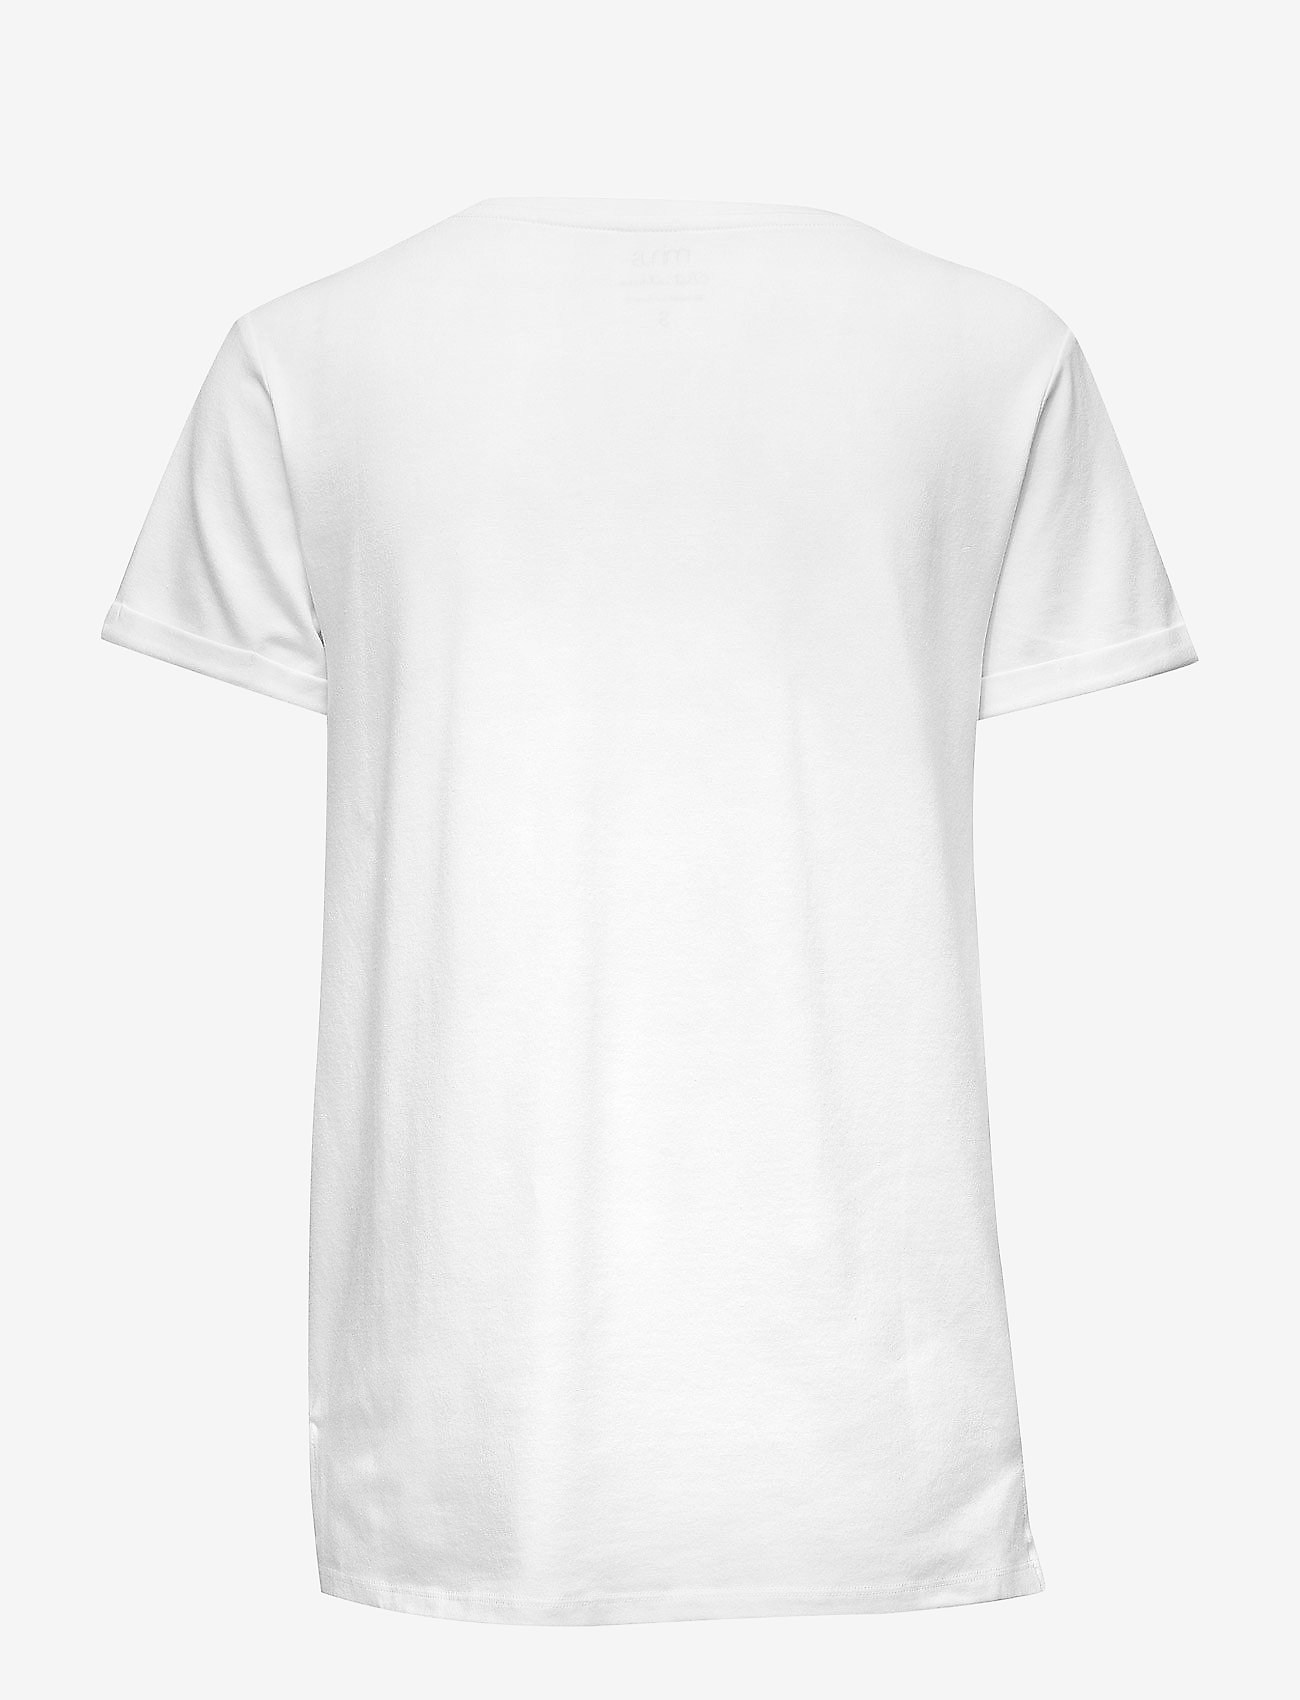 Minus - Adele tee - t-shirts - white - 1